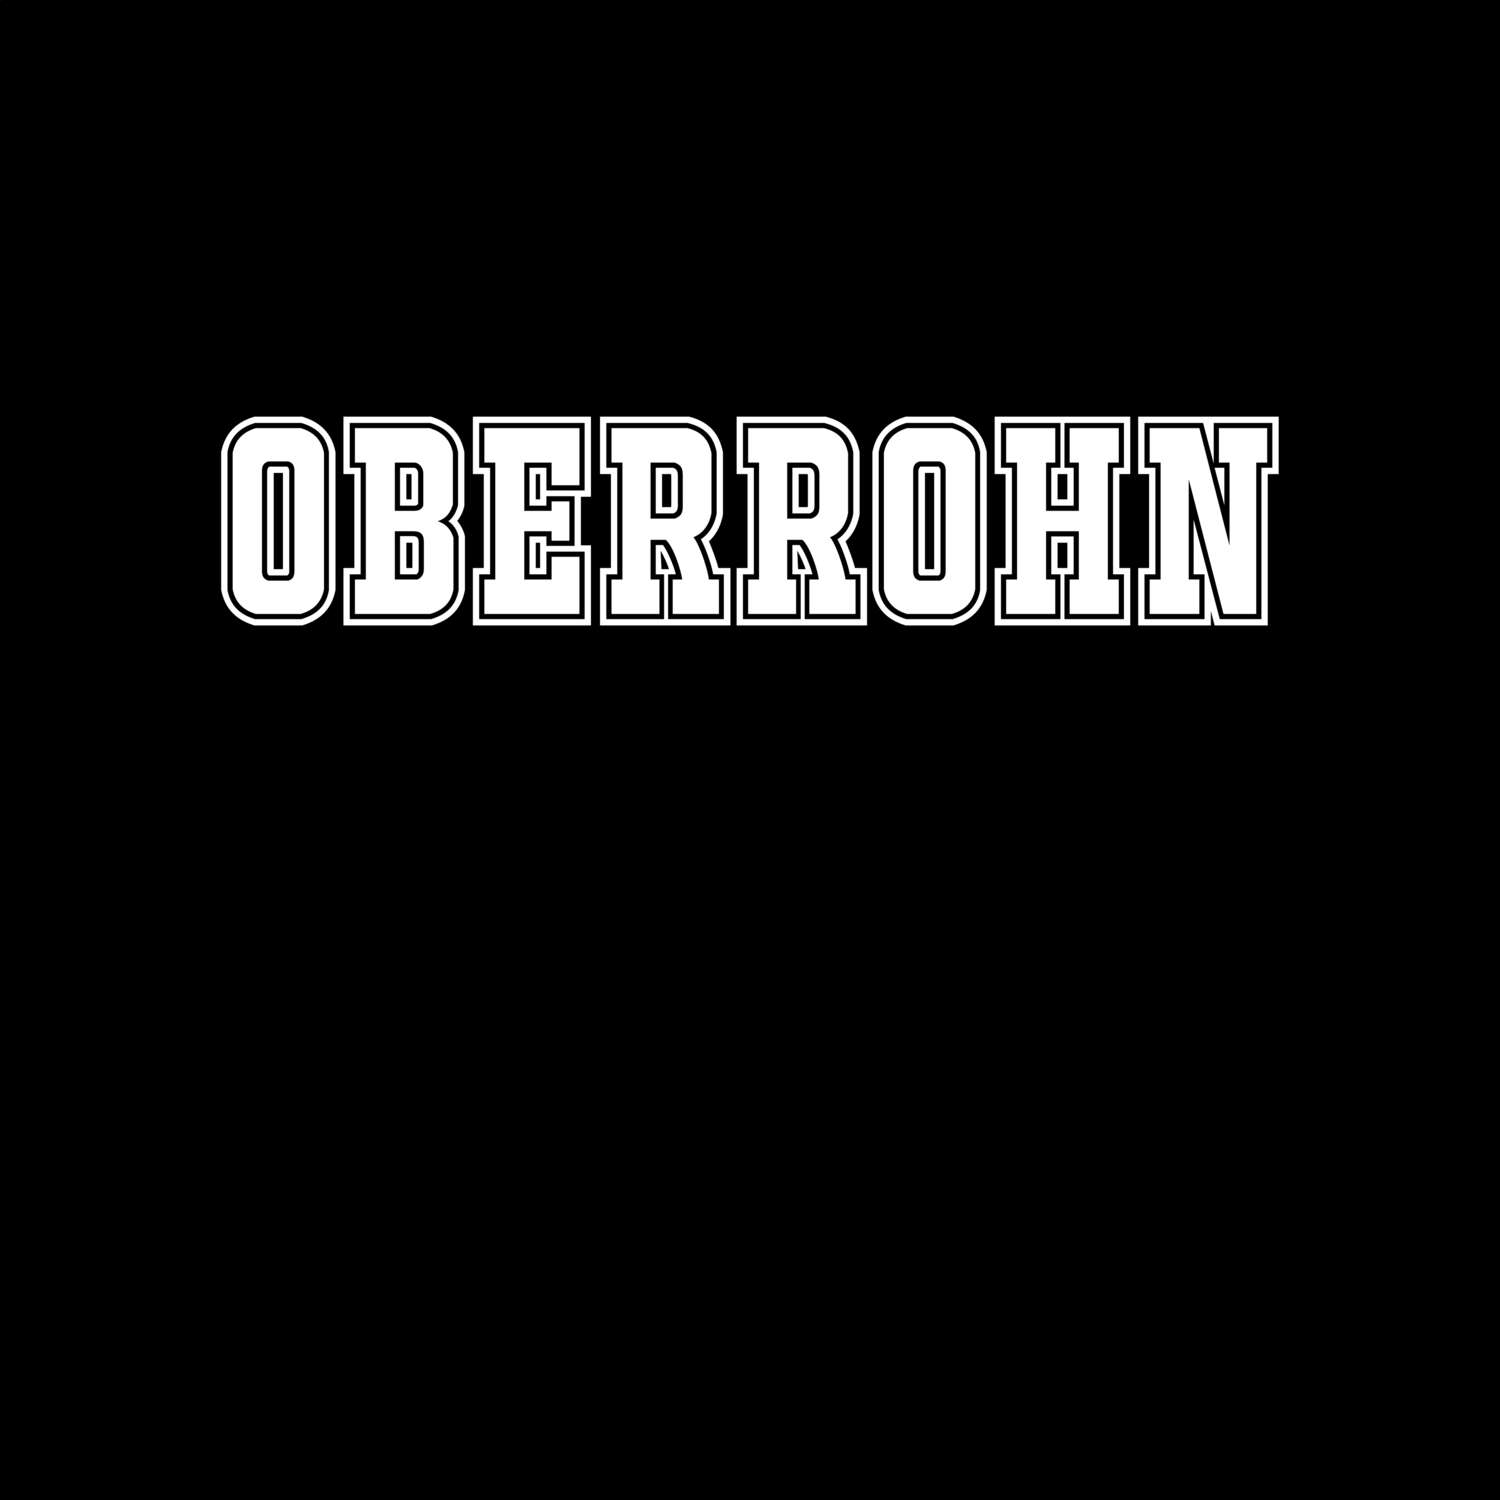 Oberrohn T-Shirt »Classic«